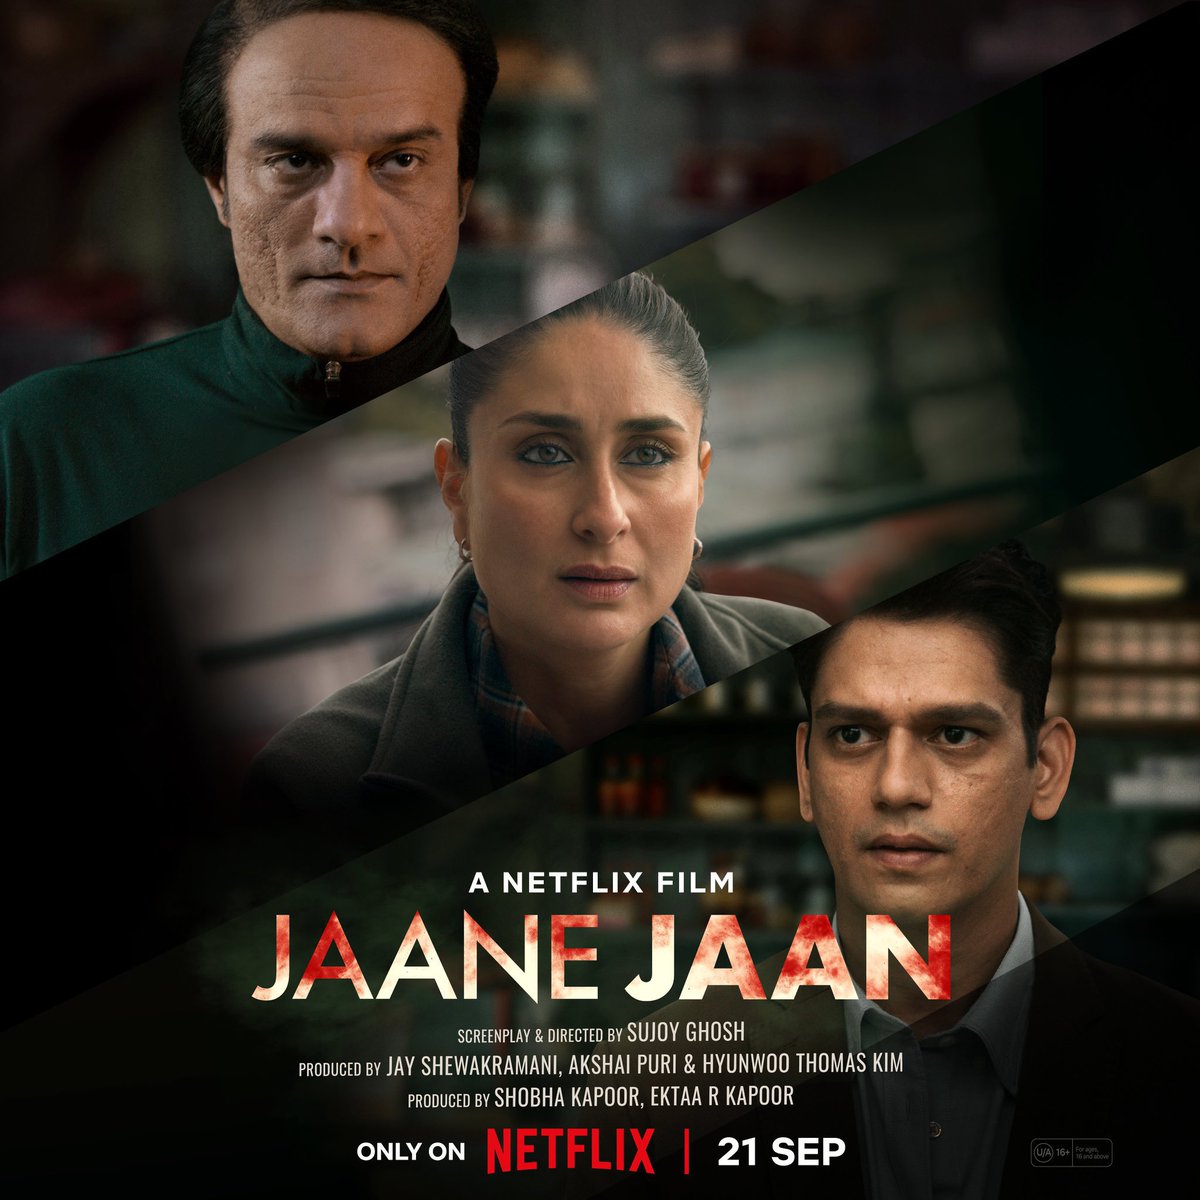 #JaaneJaan, directed by #SujoyGhosh, starring #KareenaKapoorKhan, #JaideepAhlawat and #VijayVarma is the second most-watched Indian film on Netflix (based on 2 weeks worth of viewing data).